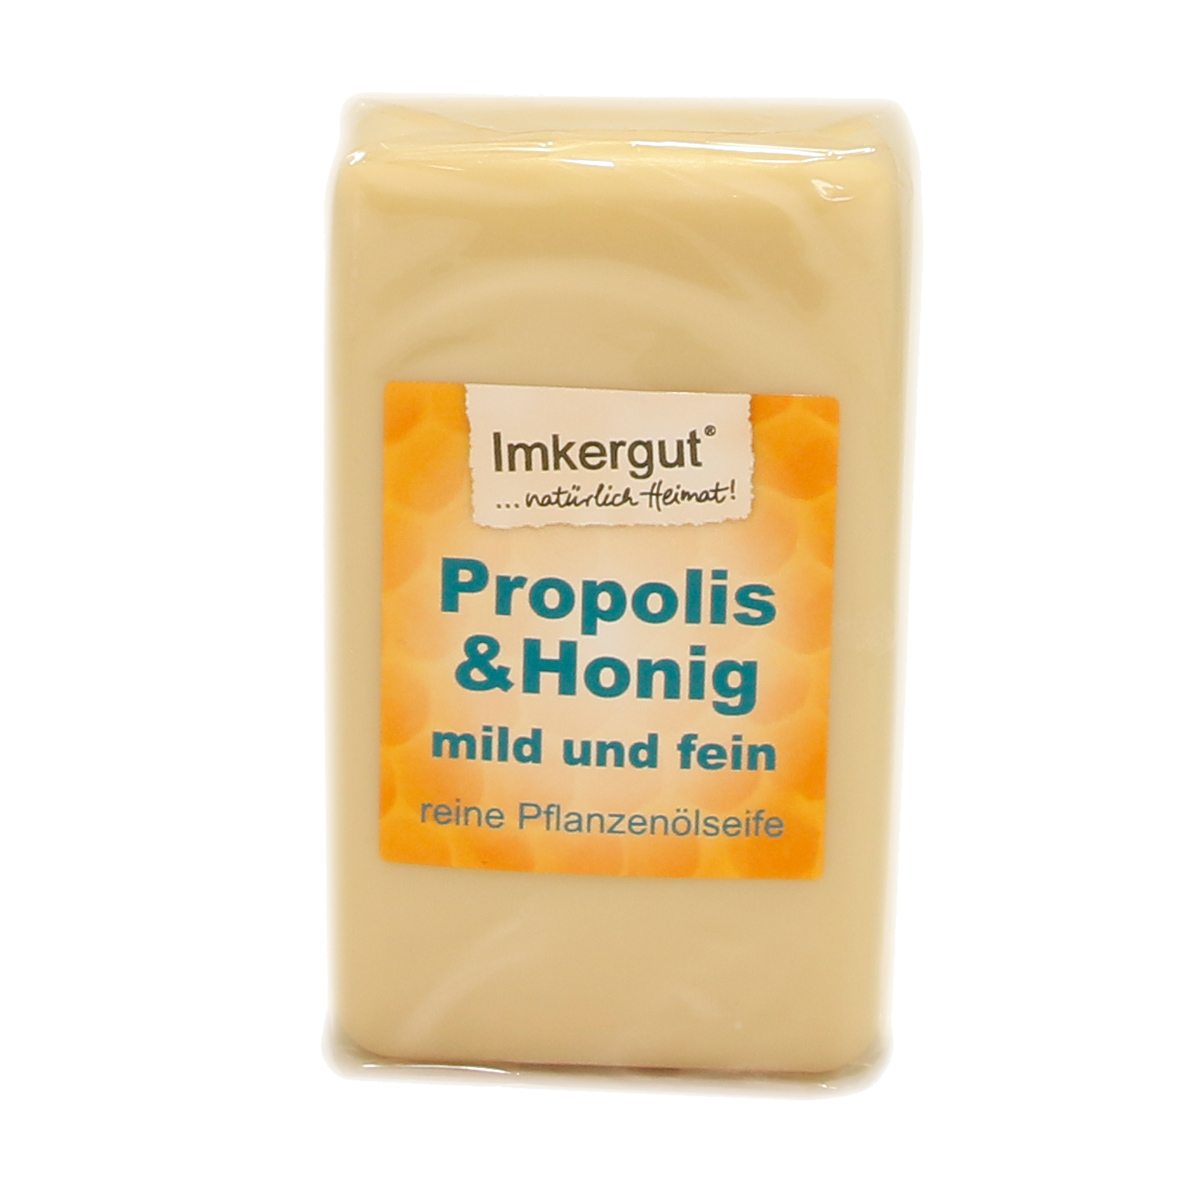 Pflanzenölseife: Propolis & Honig